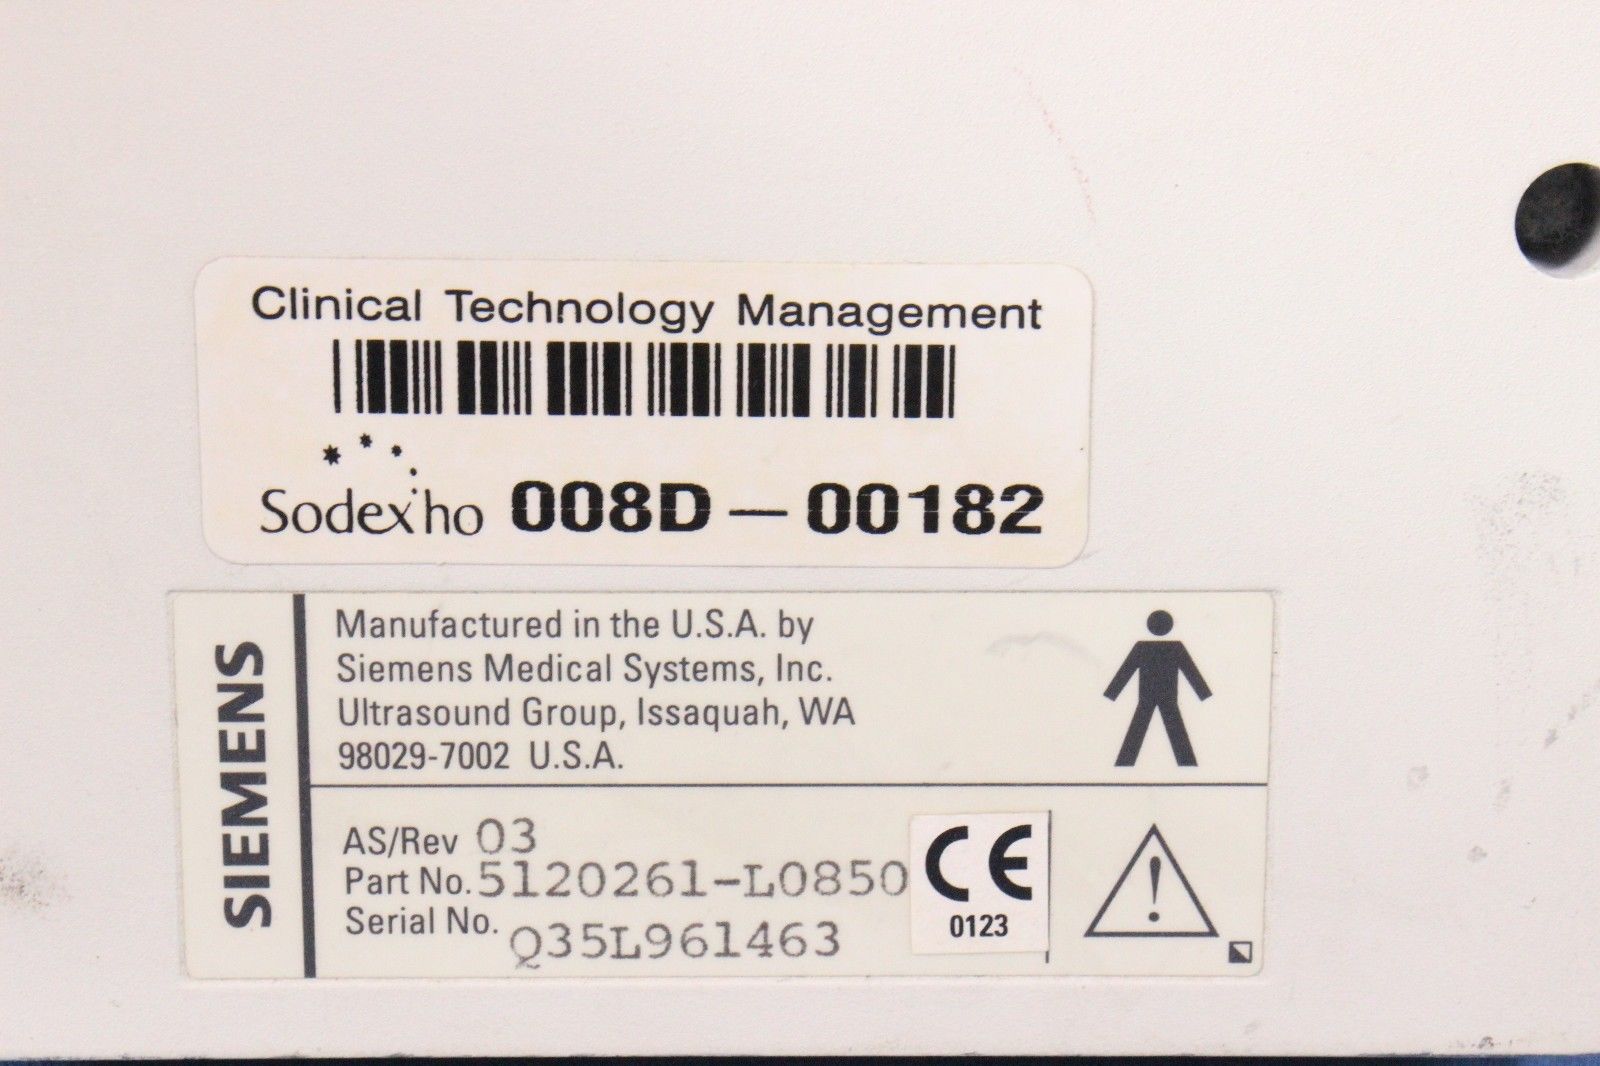 Siemens 3.5PL28 Ultrasound Probe Ultrasound Transducer with Warranty DIAGNOSTIC ULTRASOUND MACHINES FOR SALE